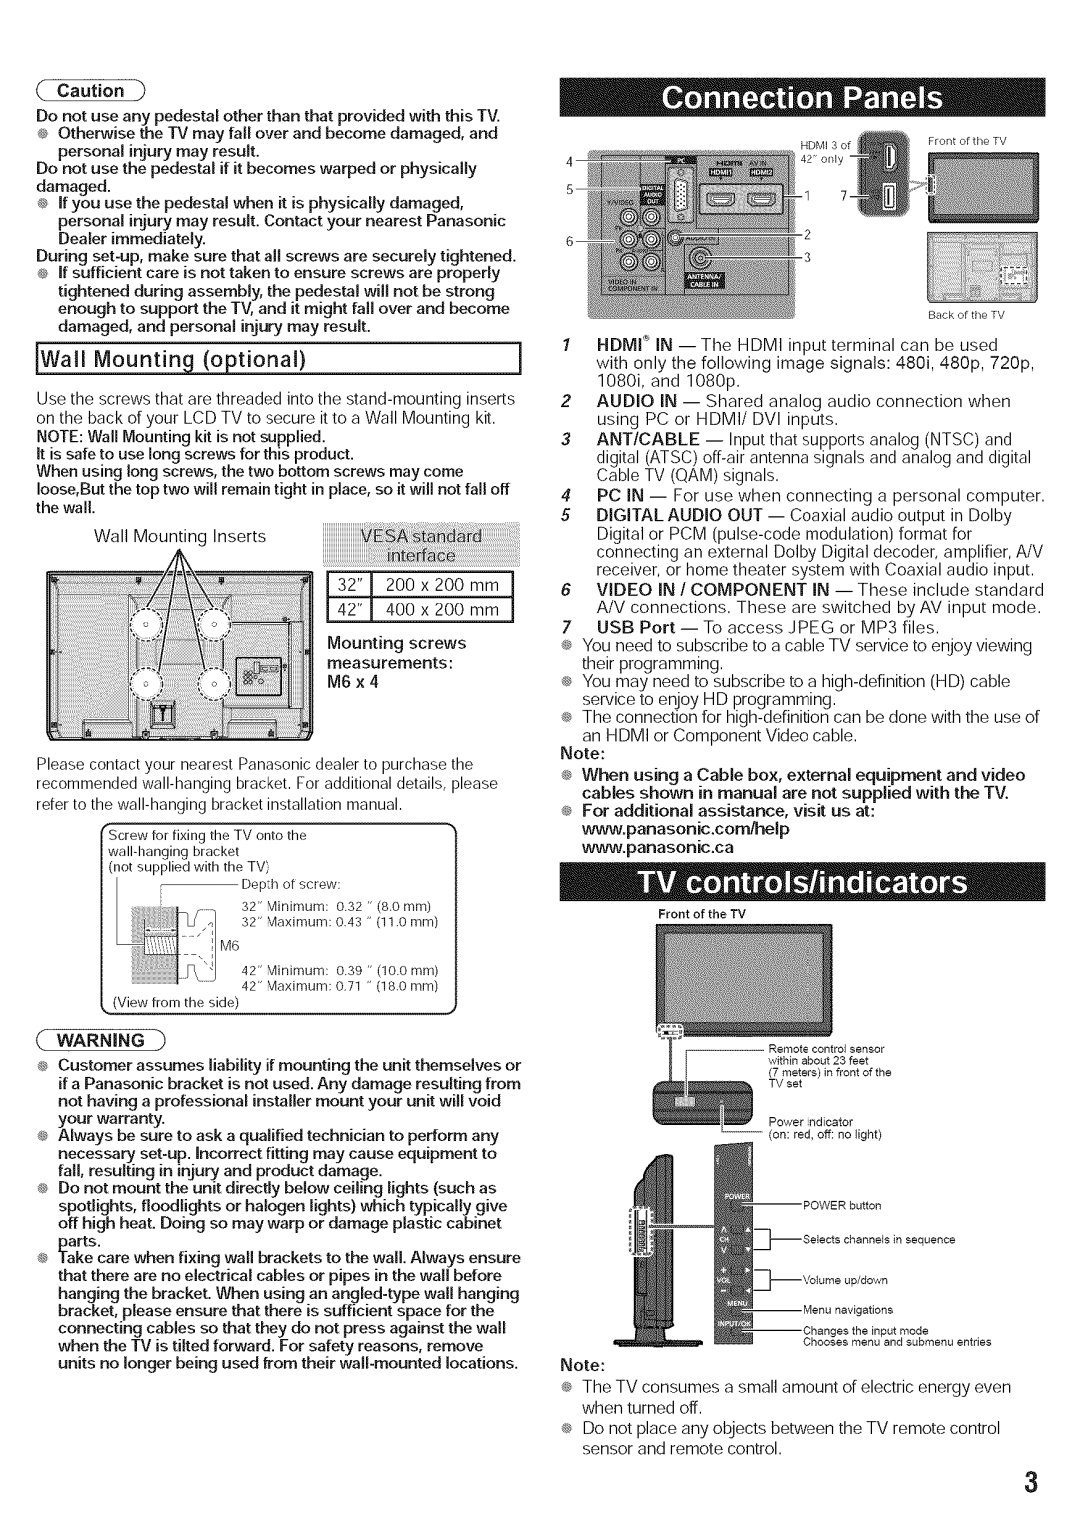 Panasonic TC-L42USX manual 400x 200 mm, tio0all, personalinjurymayresultContactyournearest.Panasonic 